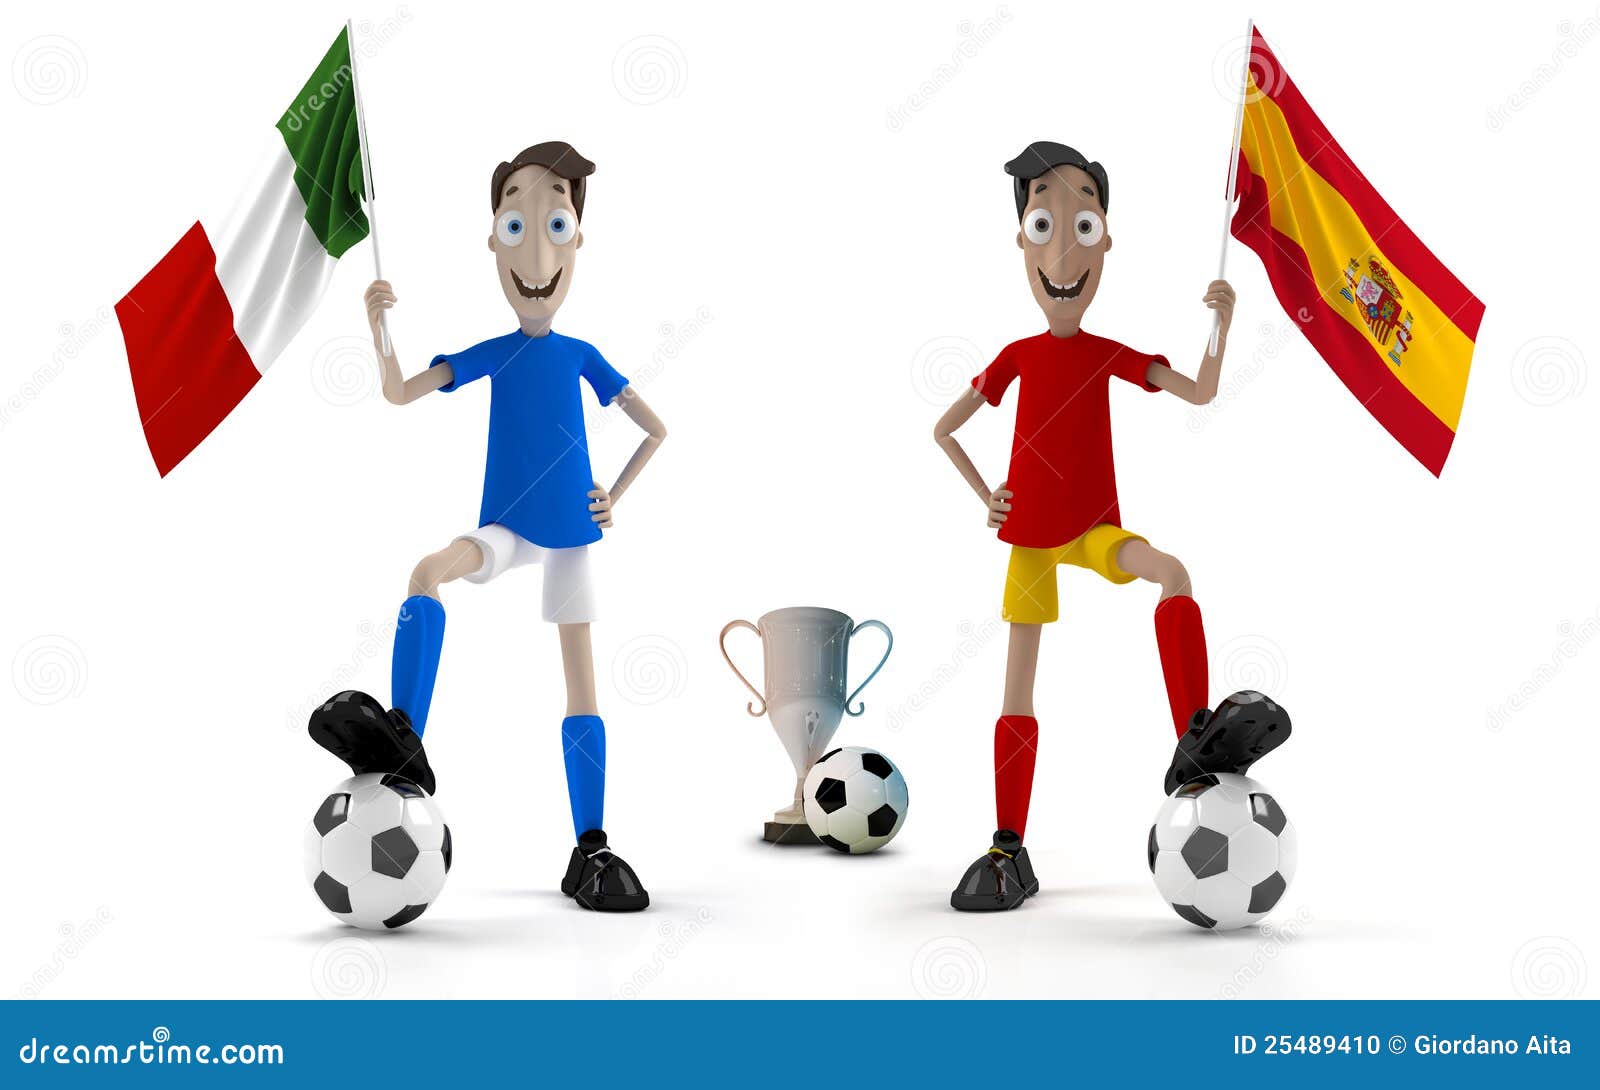 Italy vs spain